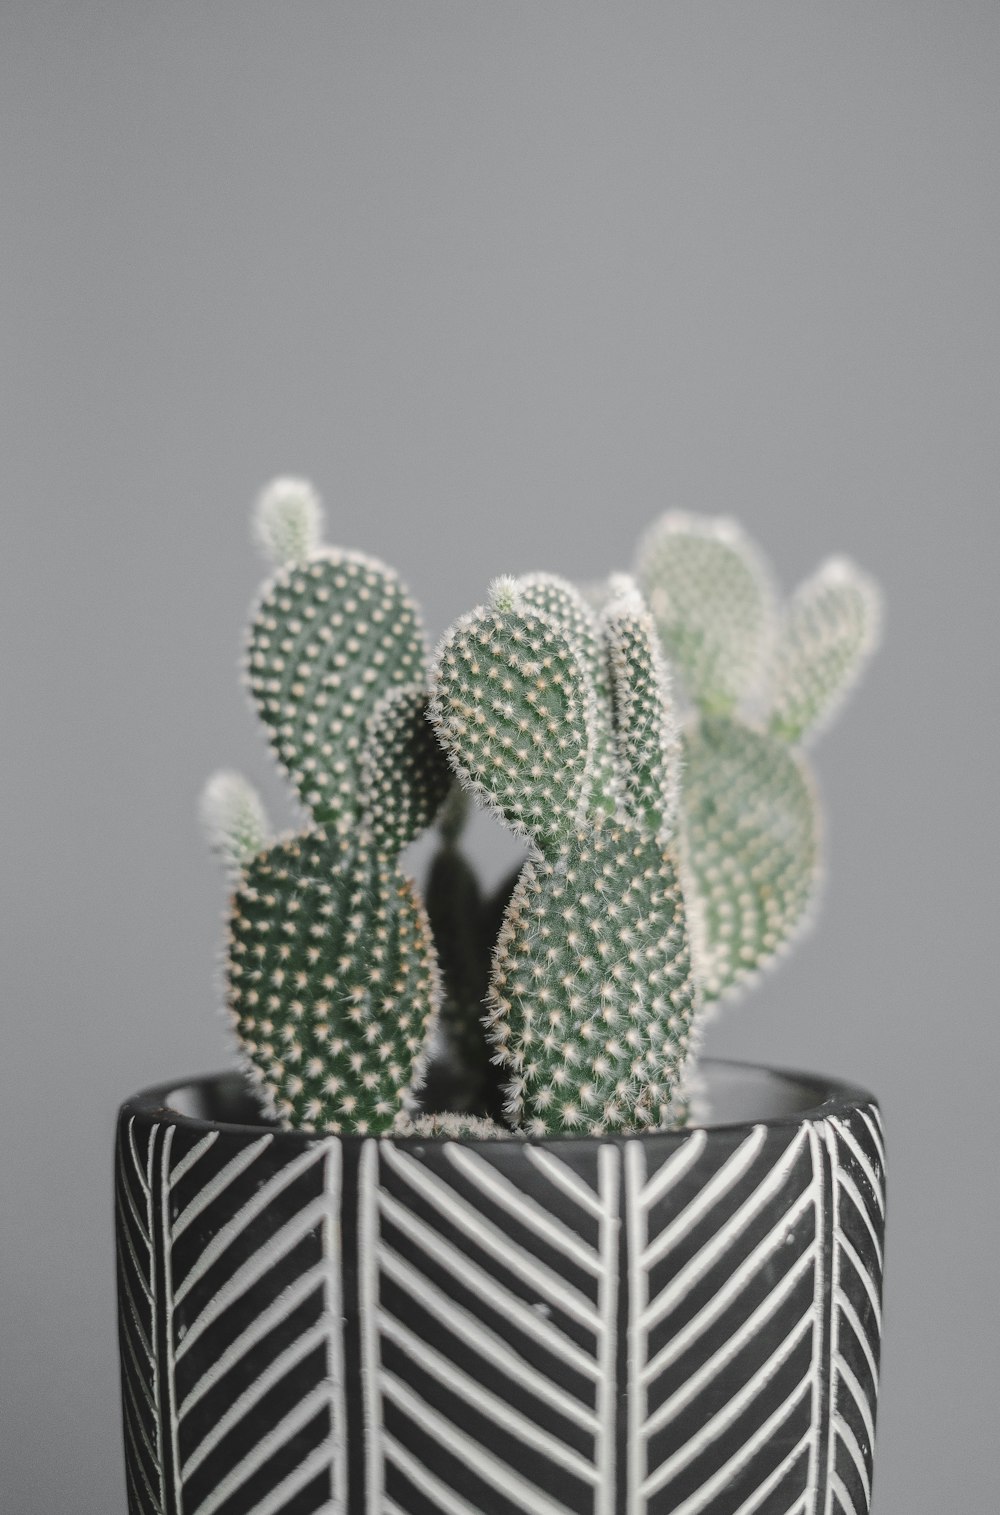 Grüner Kaktus in schwarz-weißem Keramiktopf